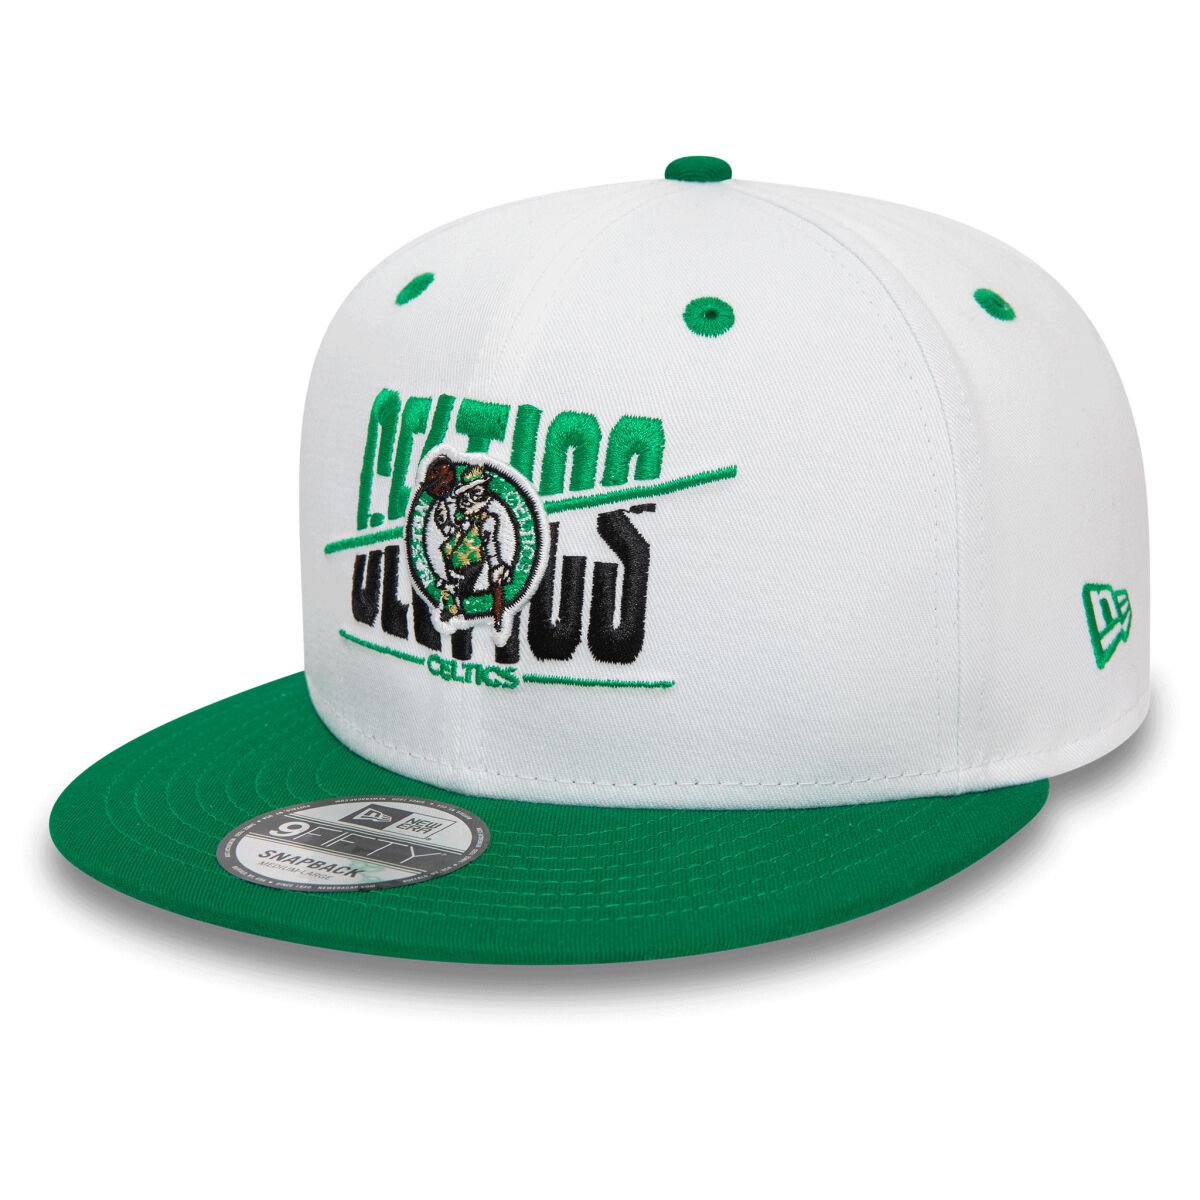 New Era - Nba Boston Celtics White Crown 9fifty Snapback Cap